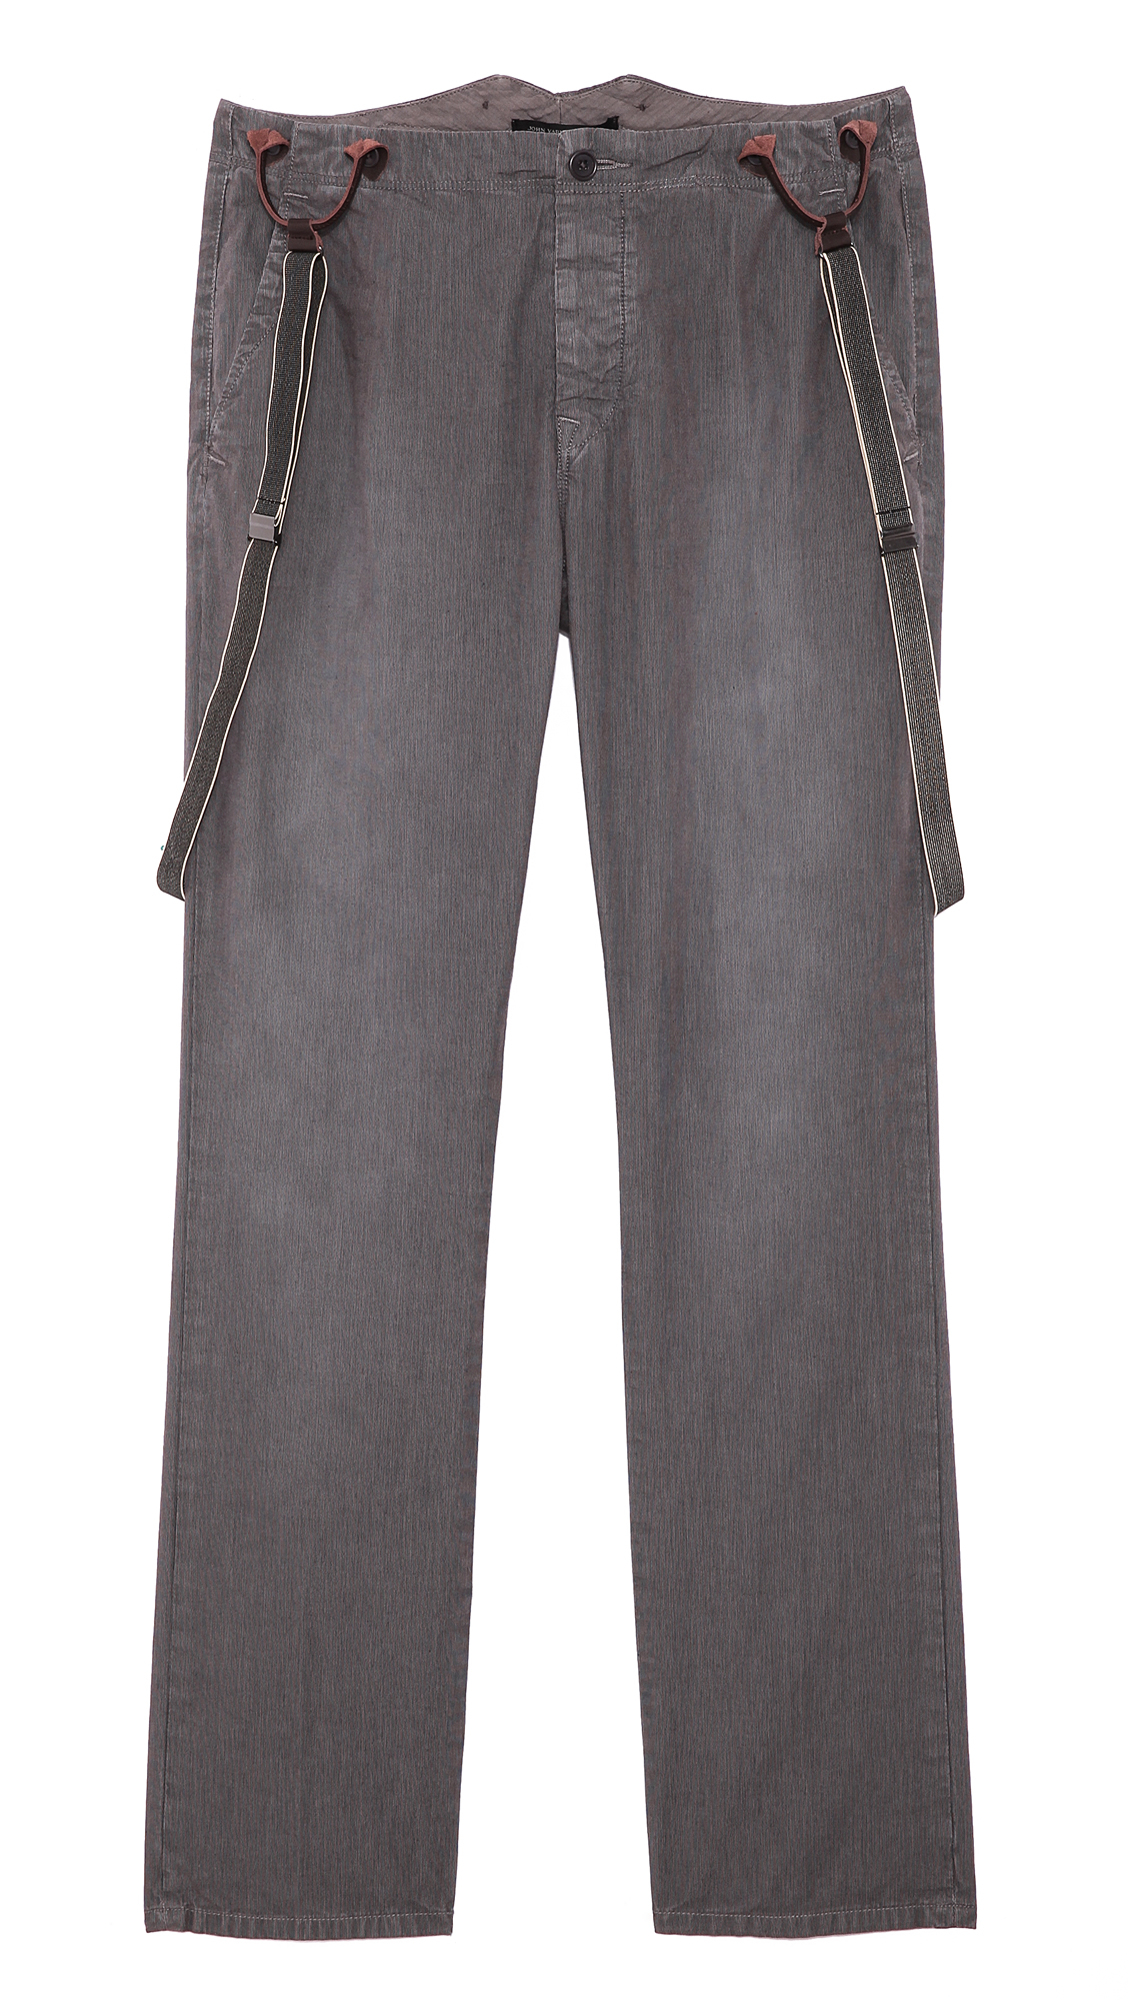 Lyst - John Varvatos Slim Suspender Pants in Gray for Men